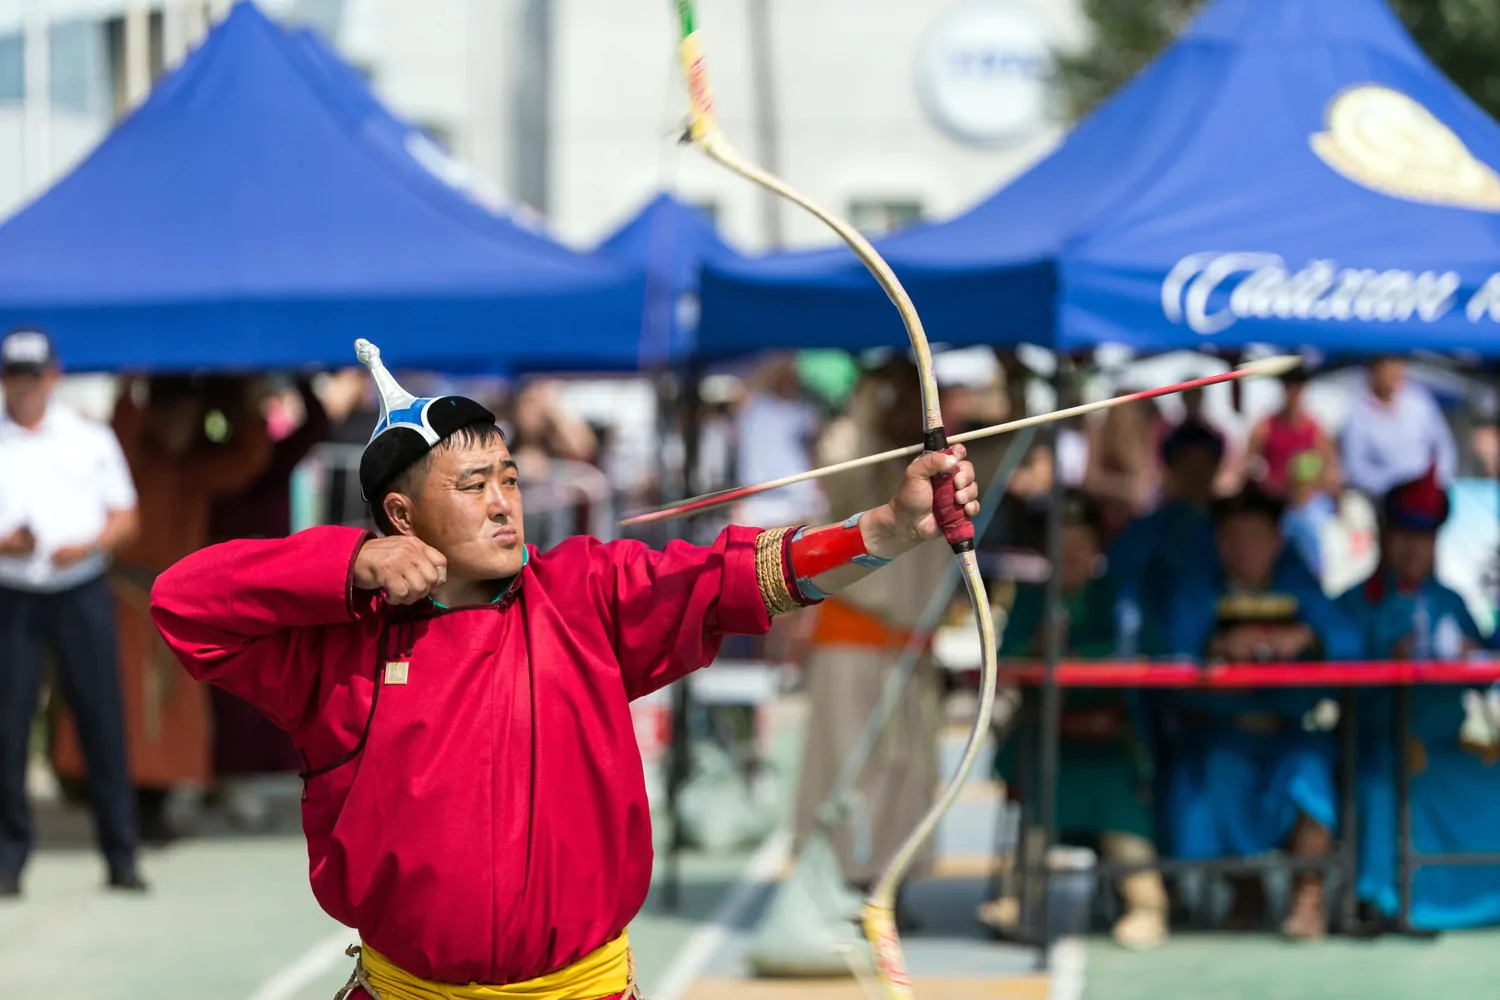 Naadam Festival archery contests